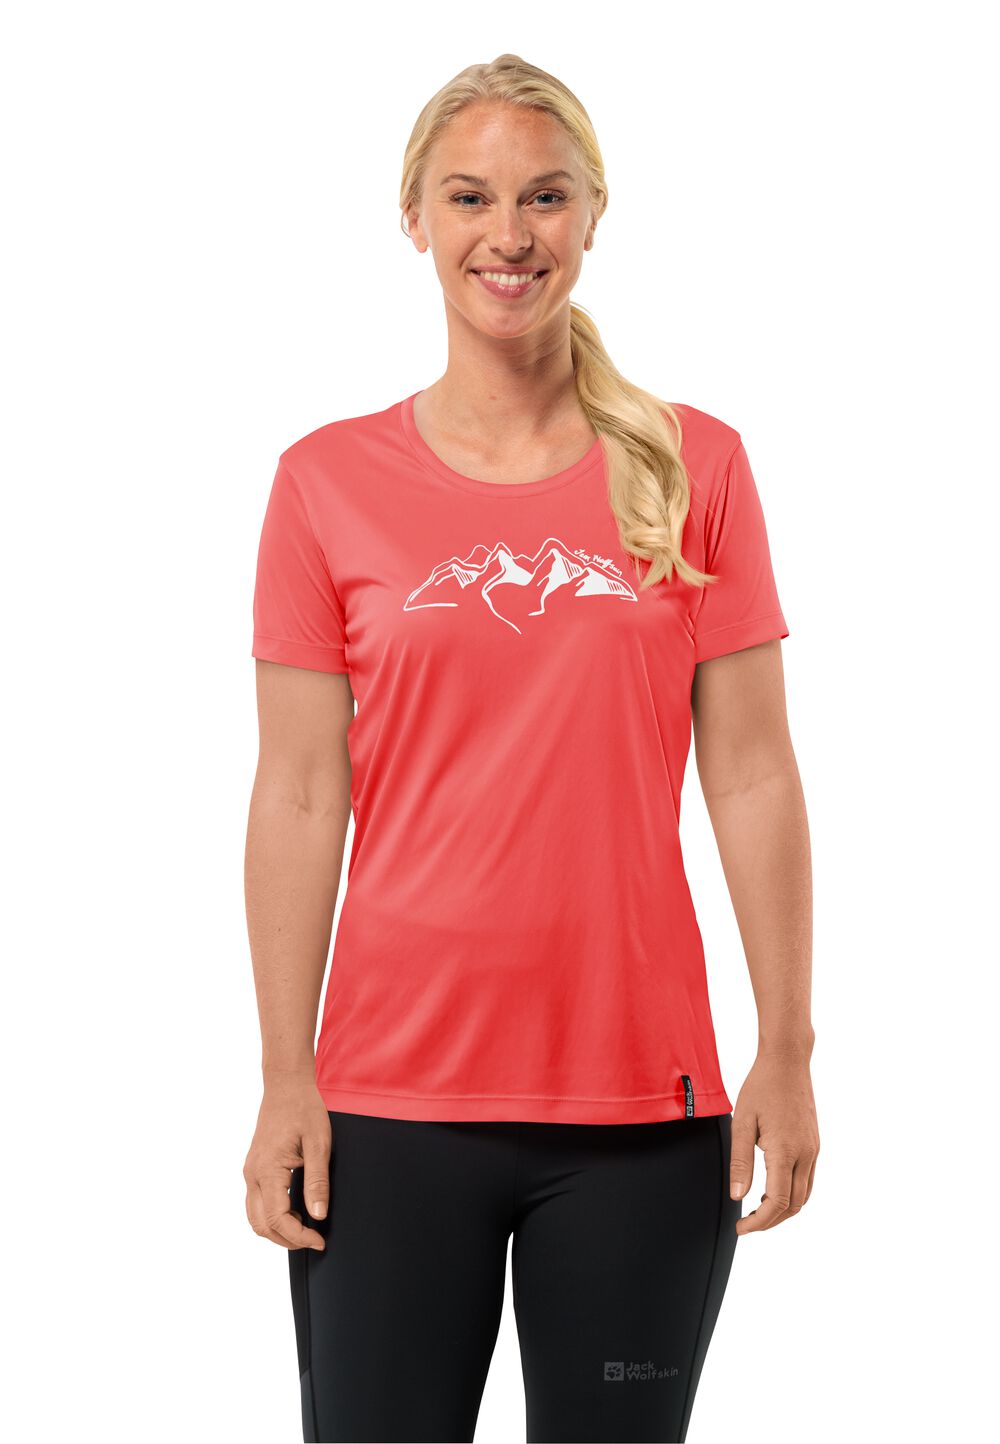 Jack Wolfskin Peak Graphic T-Shirt Women Functioneel shirt Dames XS rood vibrant red